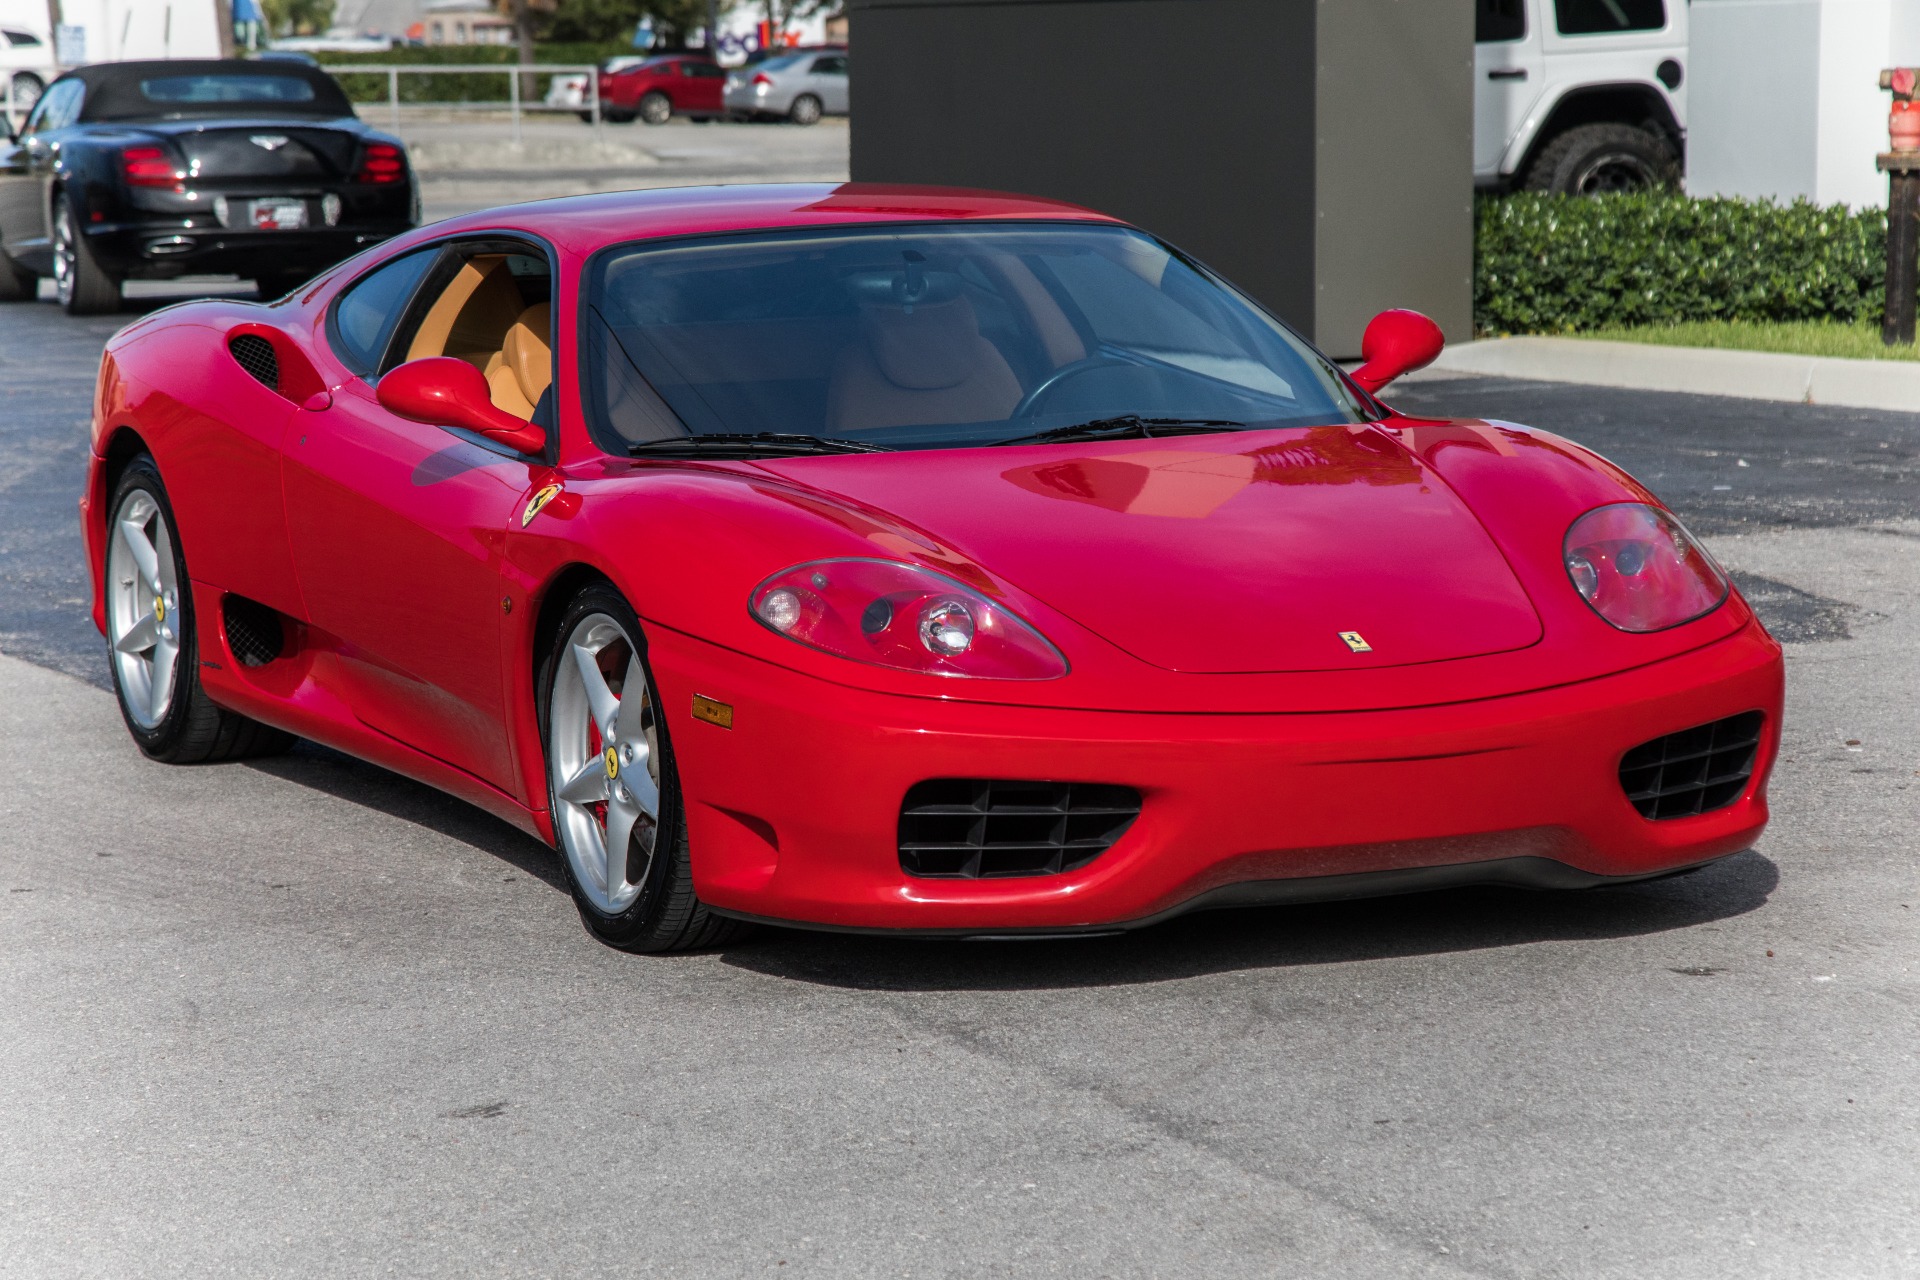 Used 2004 Ferrari 360 Modena For Sale ($69,900) | Marino Performance ...